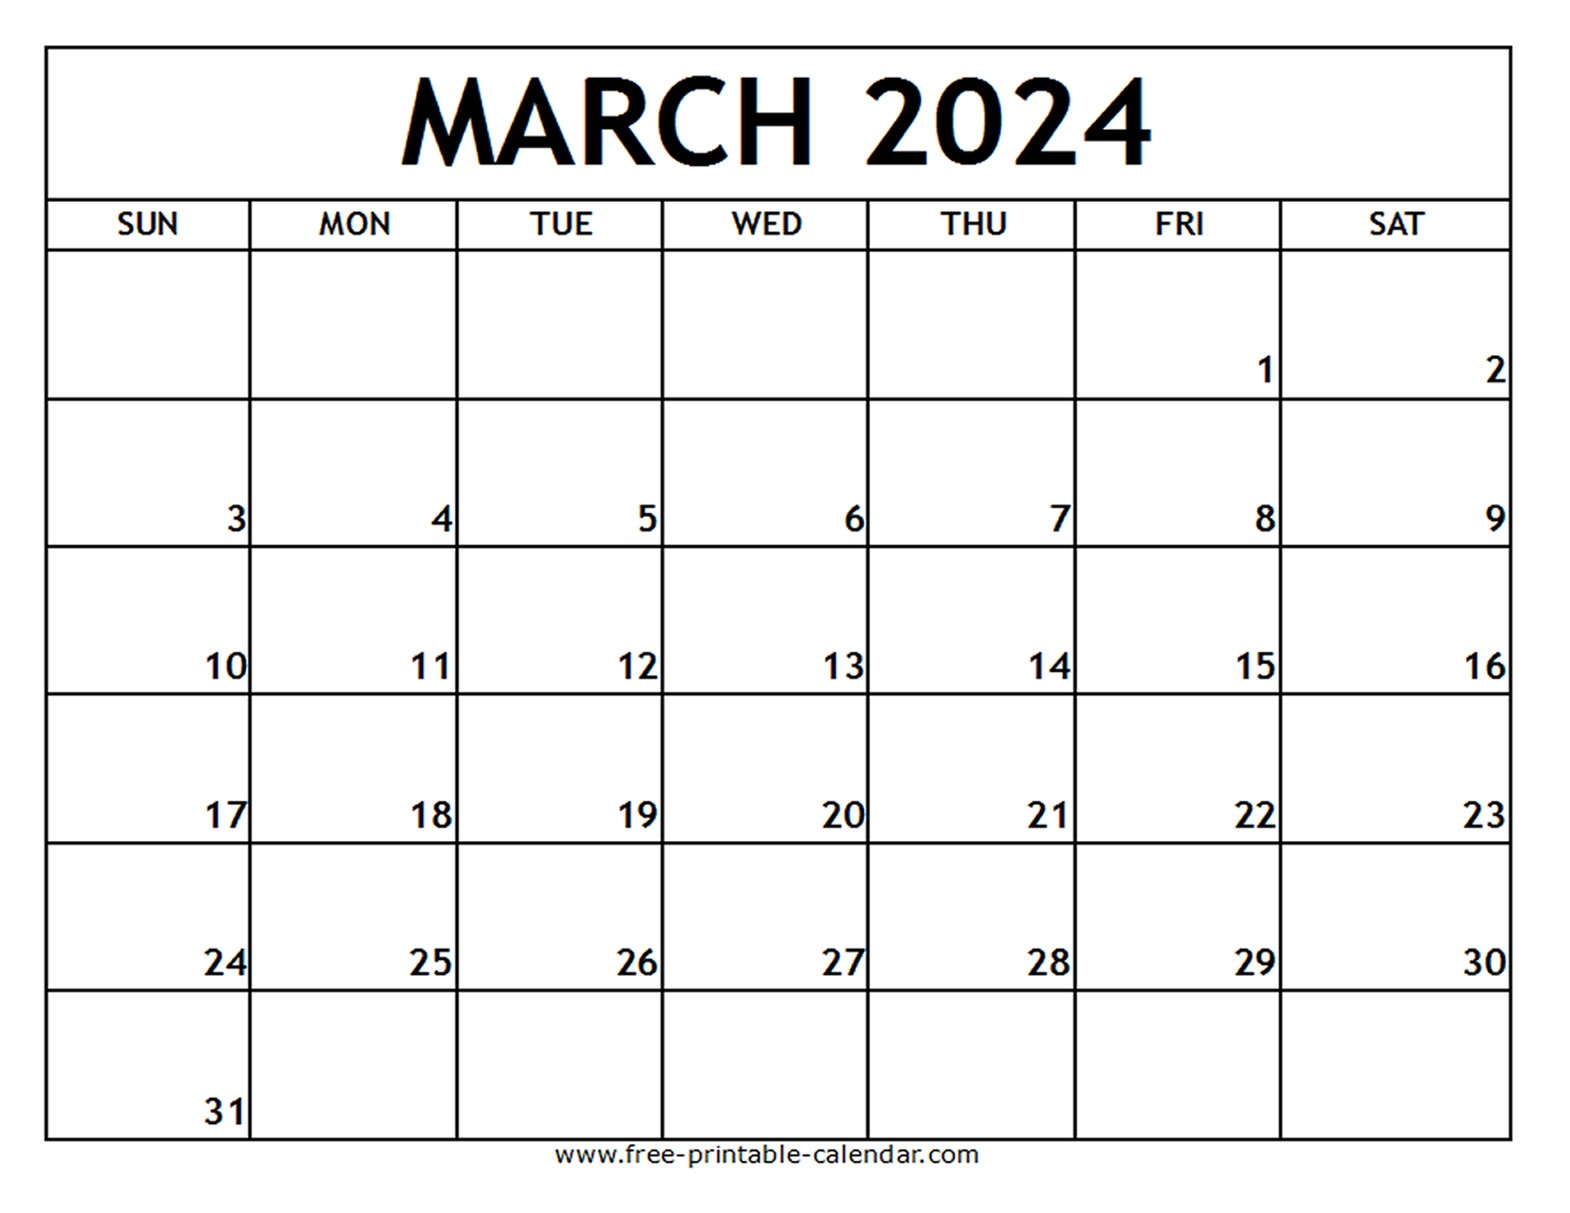 March 2024 Printable Calendar - Free-Printable-Calendar in Free Printable Calendar 2024 Printable Calendar